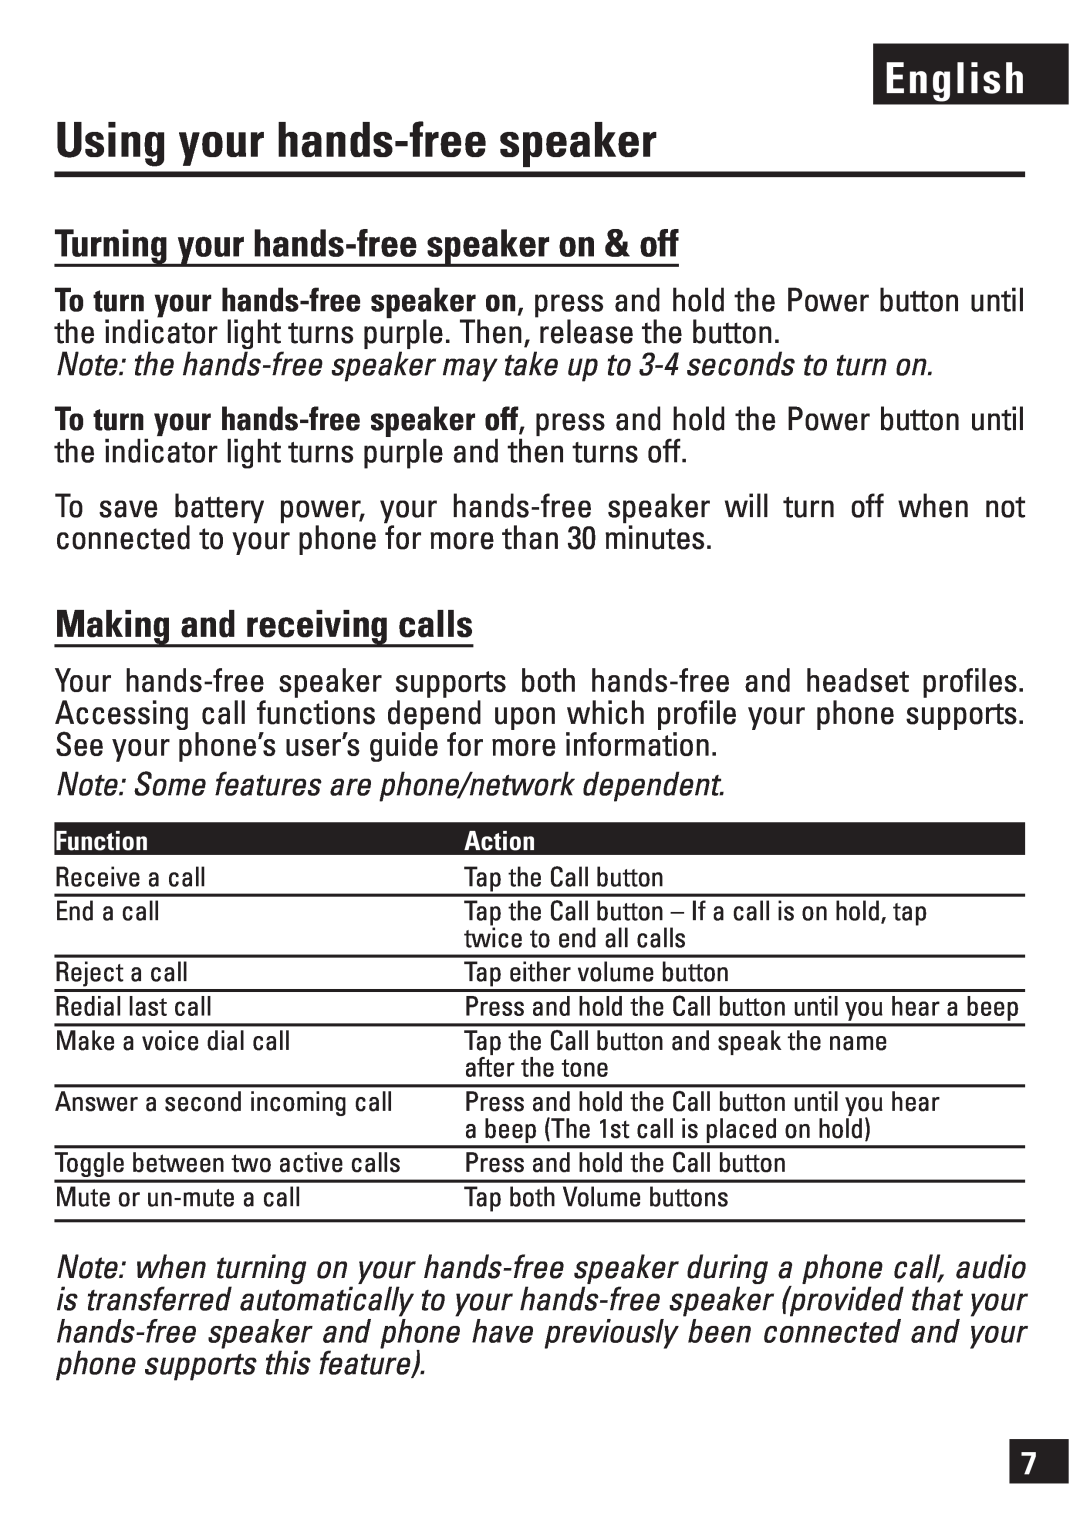 Motorola T307 Using your hands-free speaker, Turning your hands-free speaker on & off, Making and receiving calls, English 